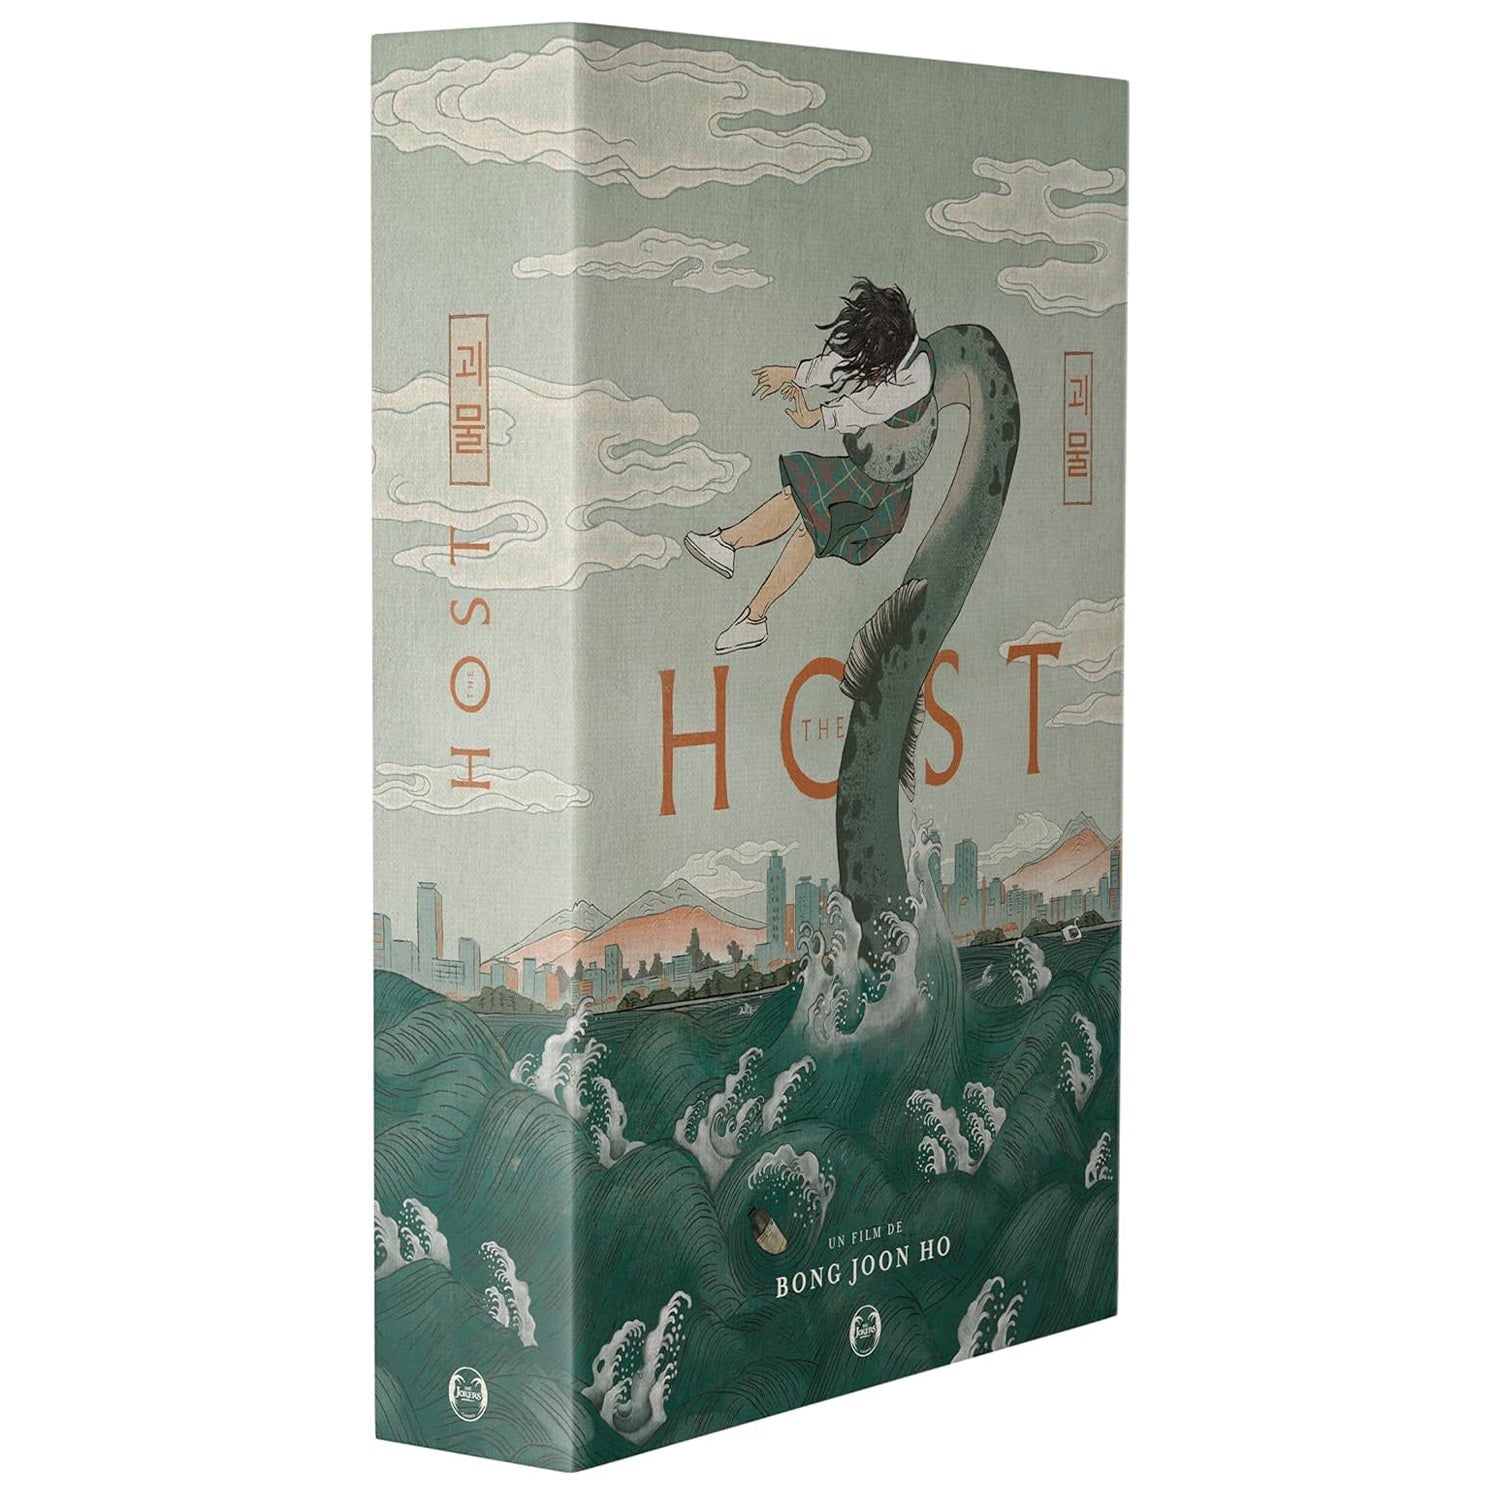 The Host Blu-ray (괴물 / Gwoemul)